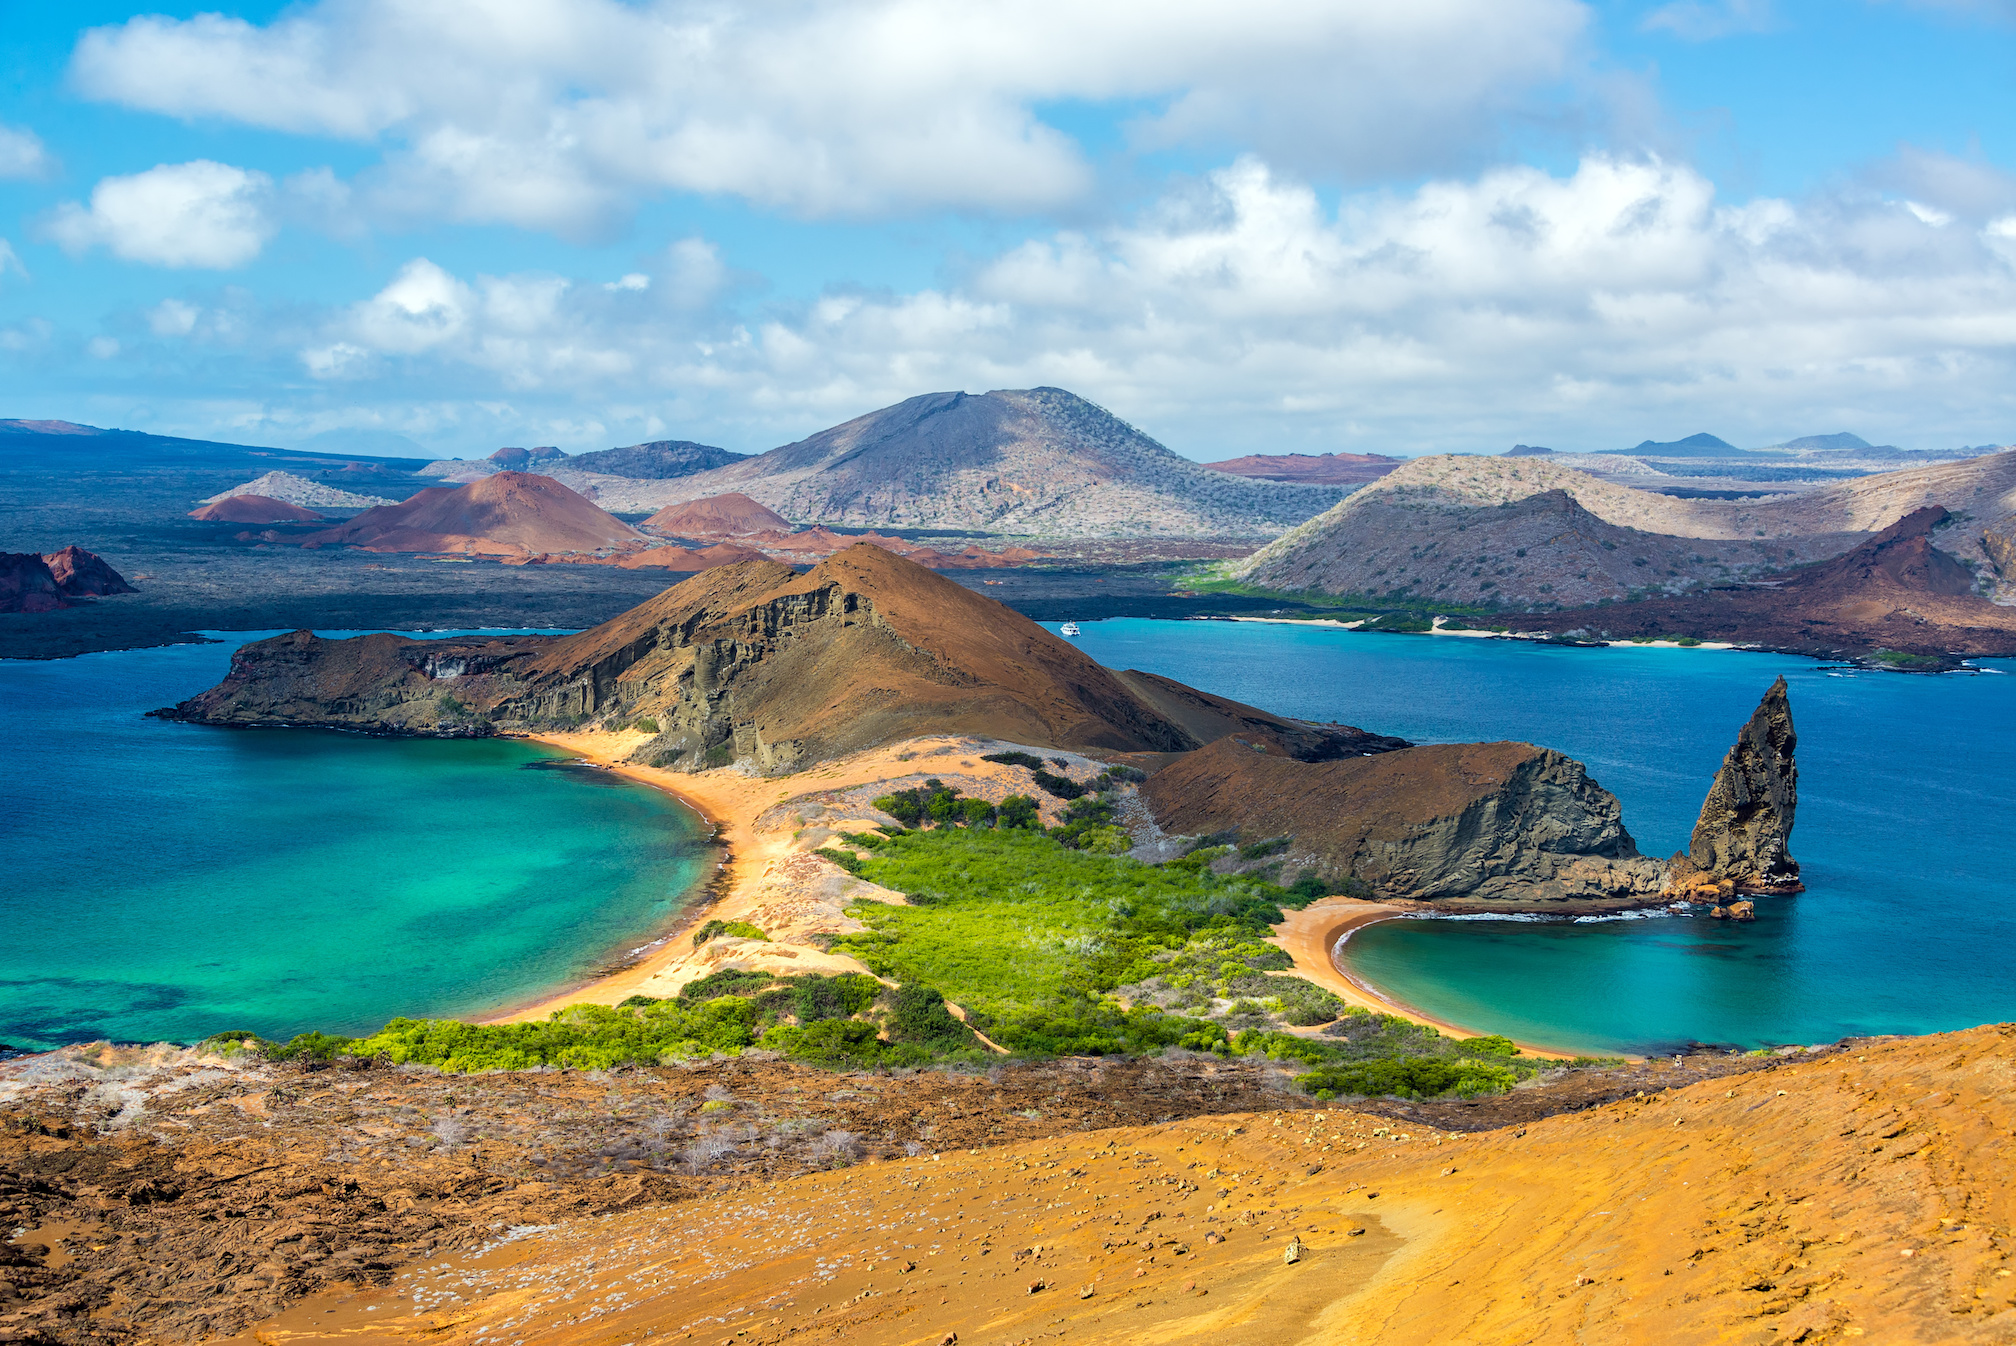 Paysage volcanique des Galápagos. © Jkraft5, Adobe Stock